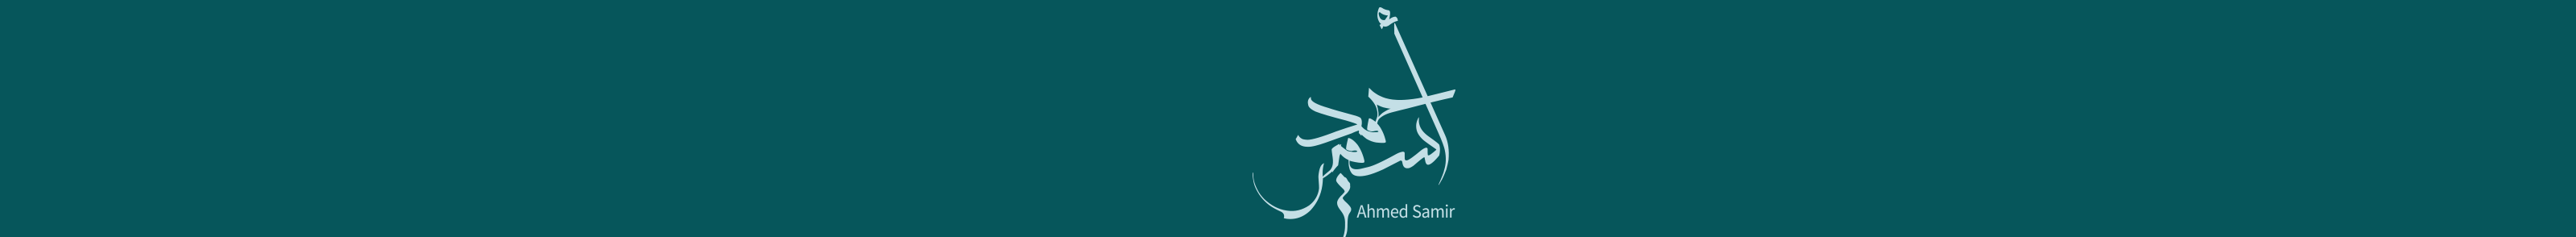 Ahmed Samir's profile banner